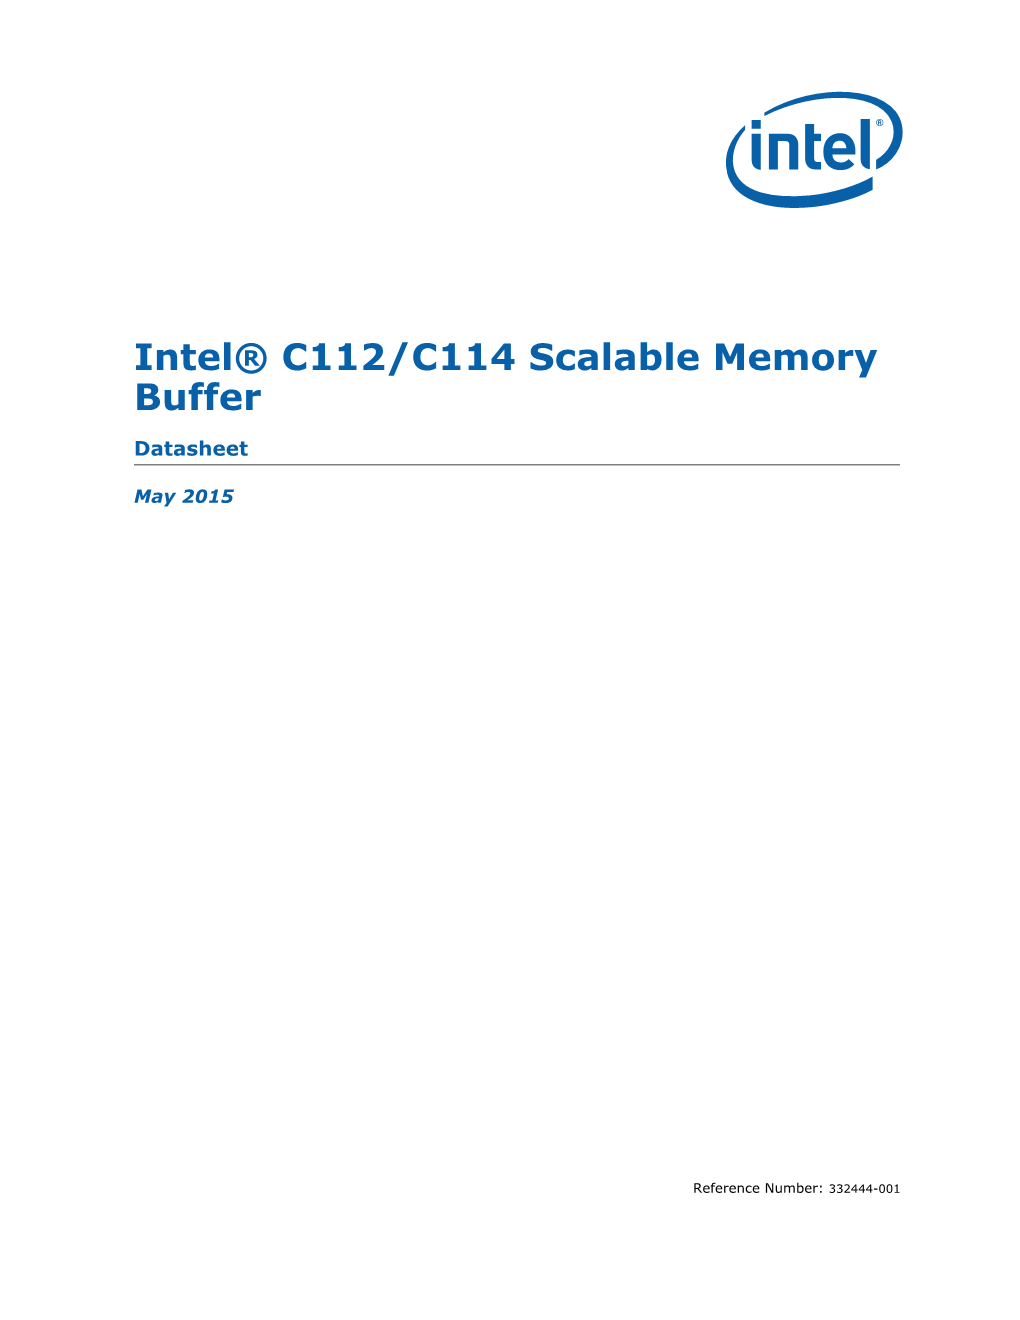 Intel® C112 and C114 Scalable Memory Buffer Datasheet